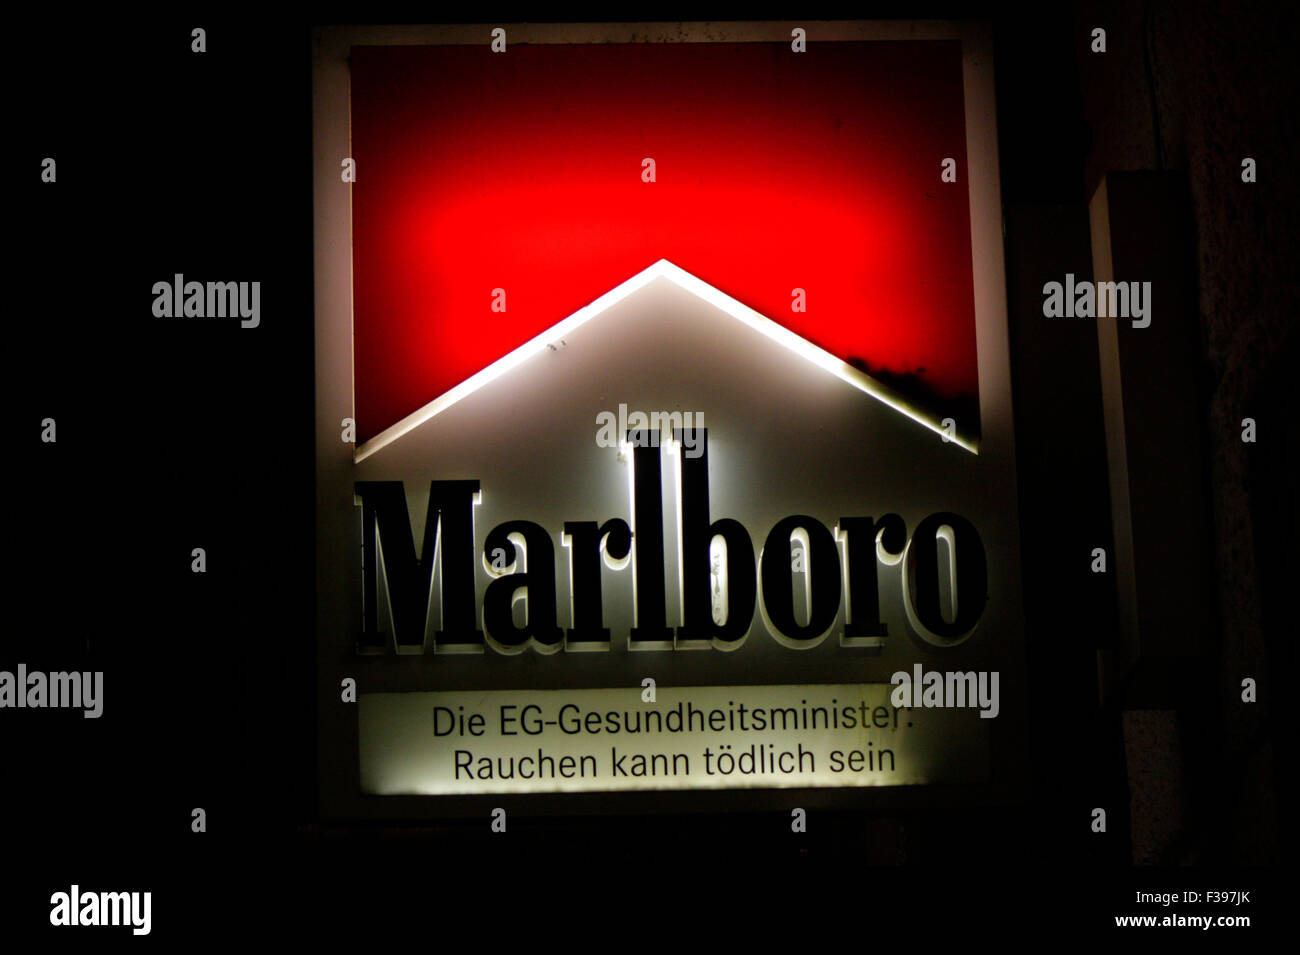 Markenname: 'Marlboro', Berlin. Stock Photo